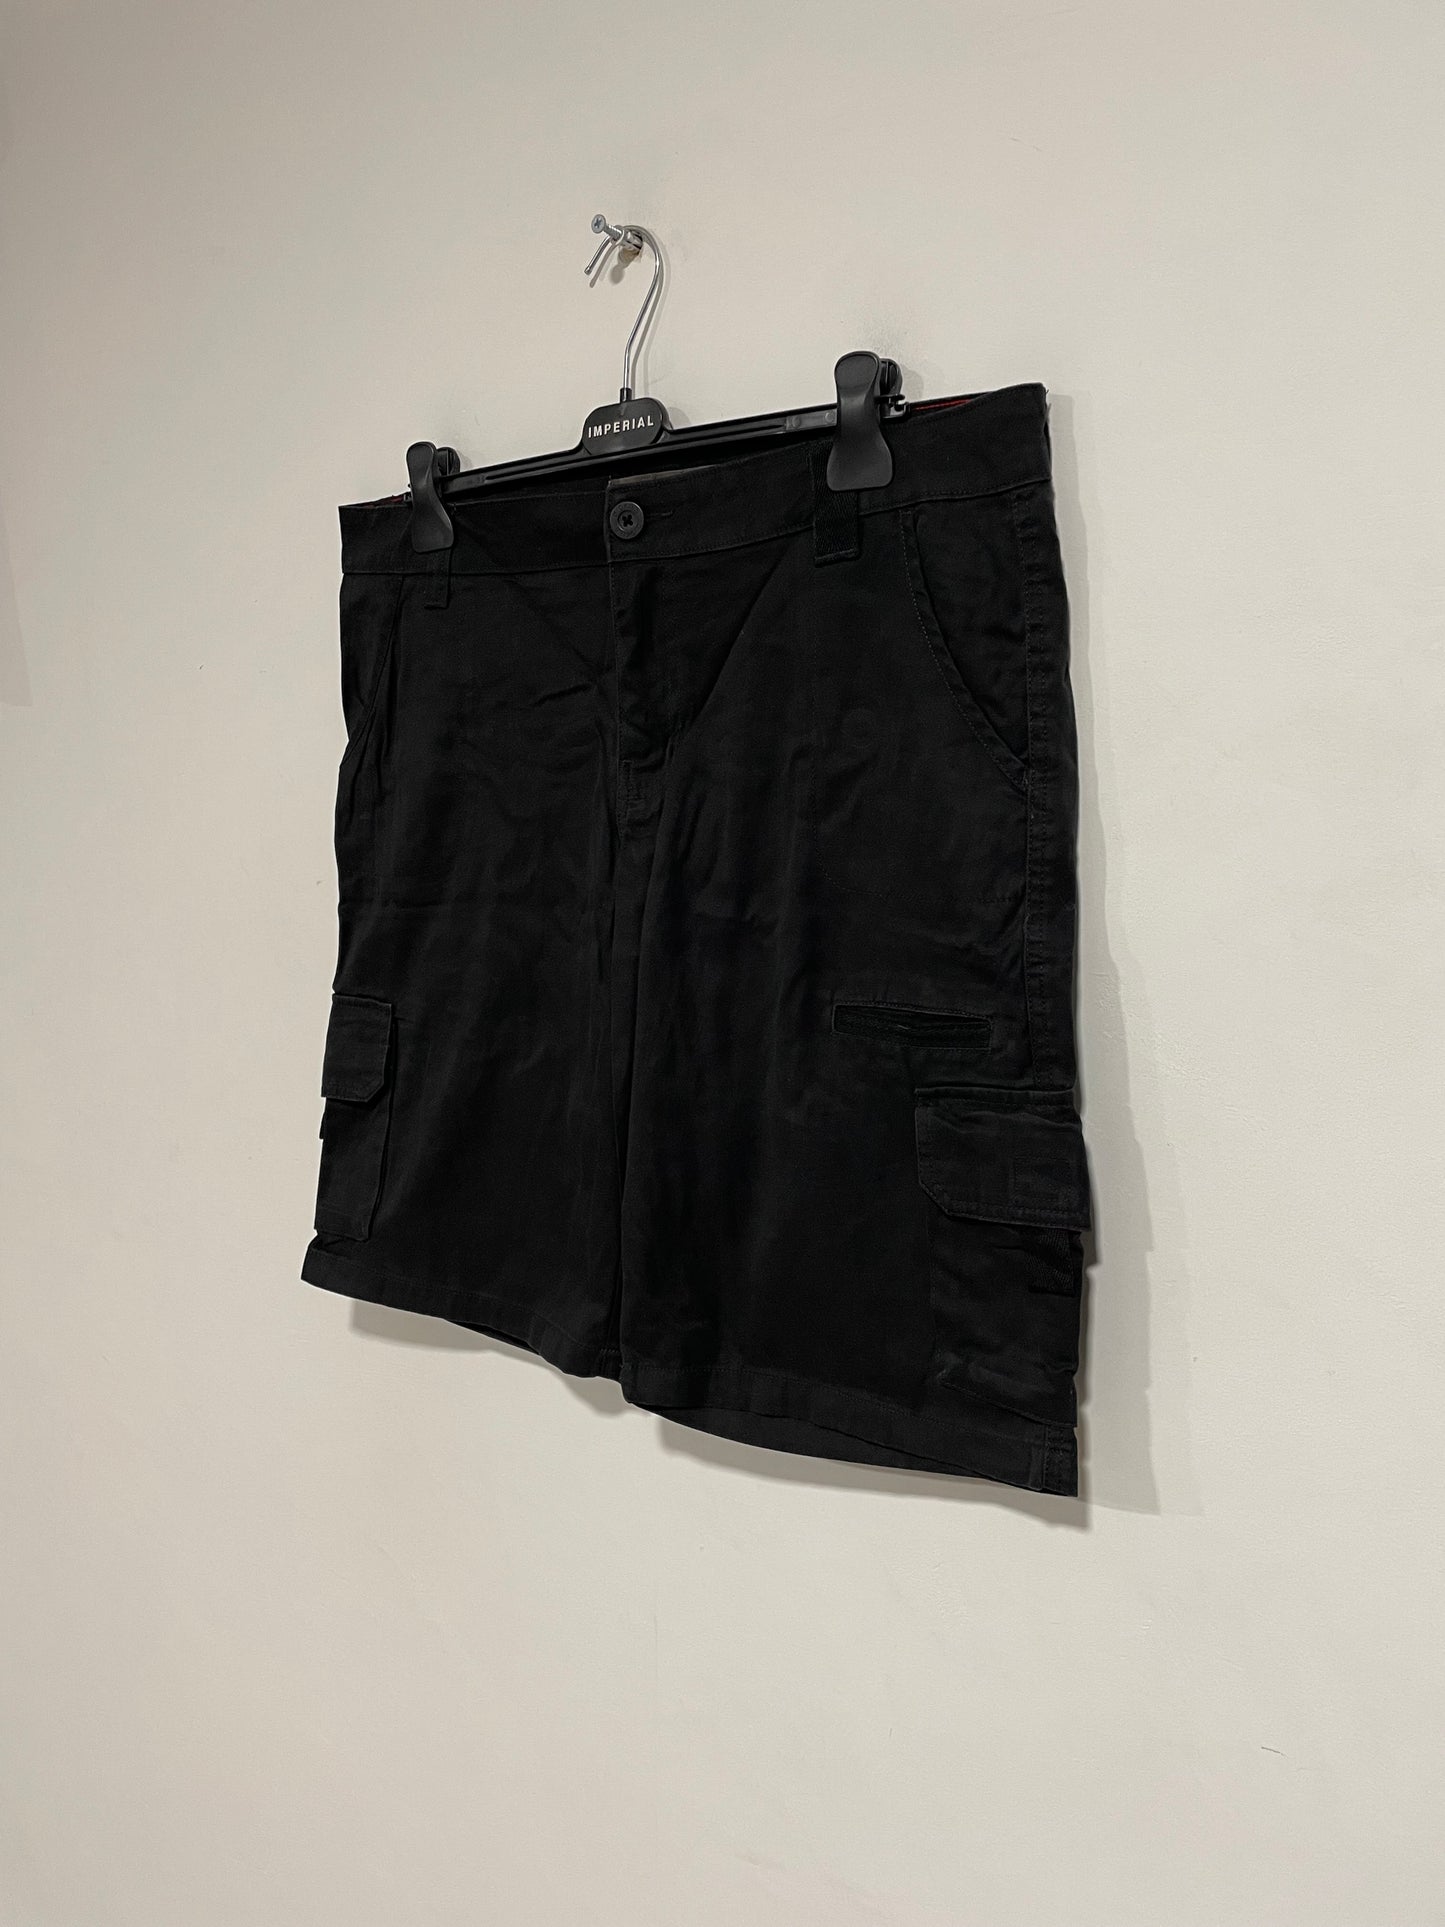 Shorts Dickies cargo black (MR569)